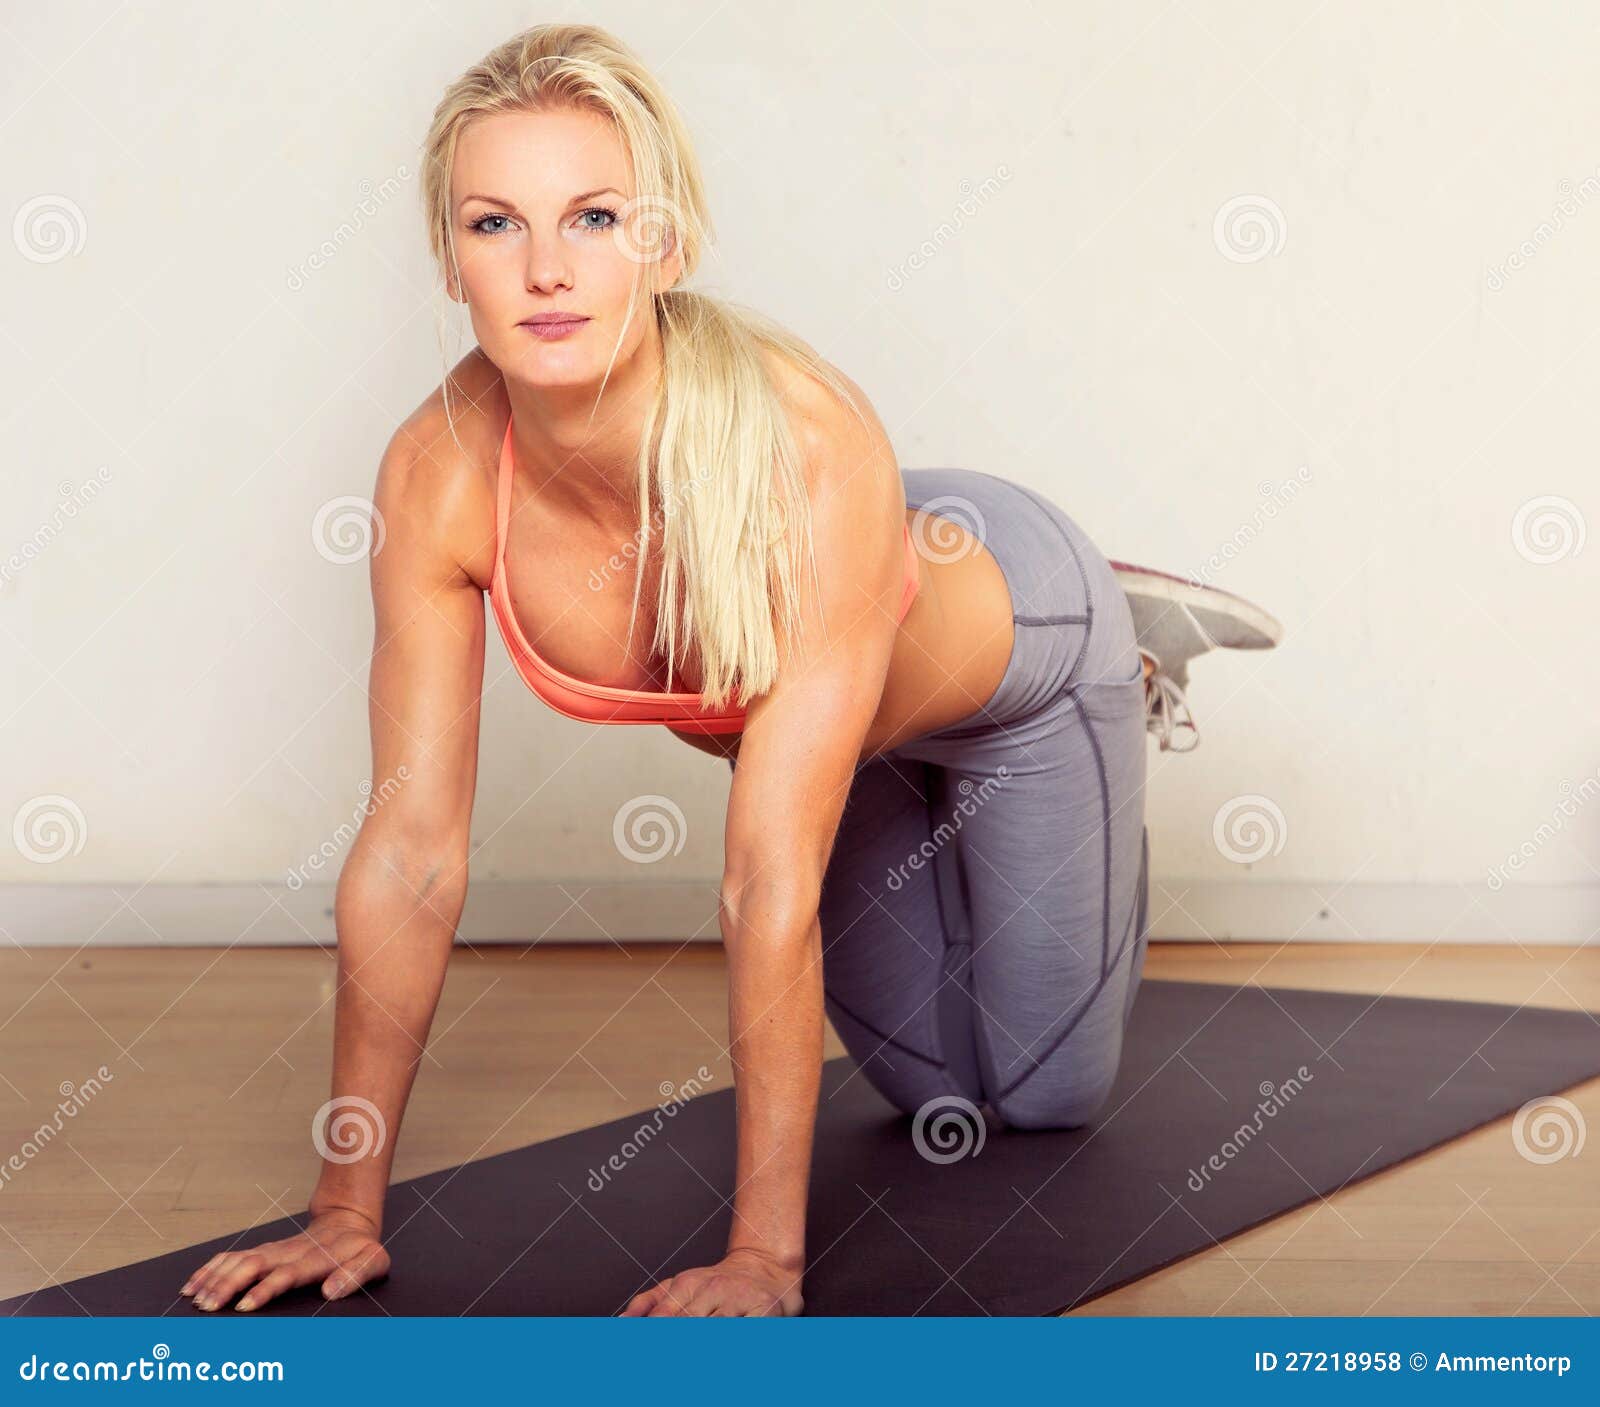 clipart hot yoga - photo #49